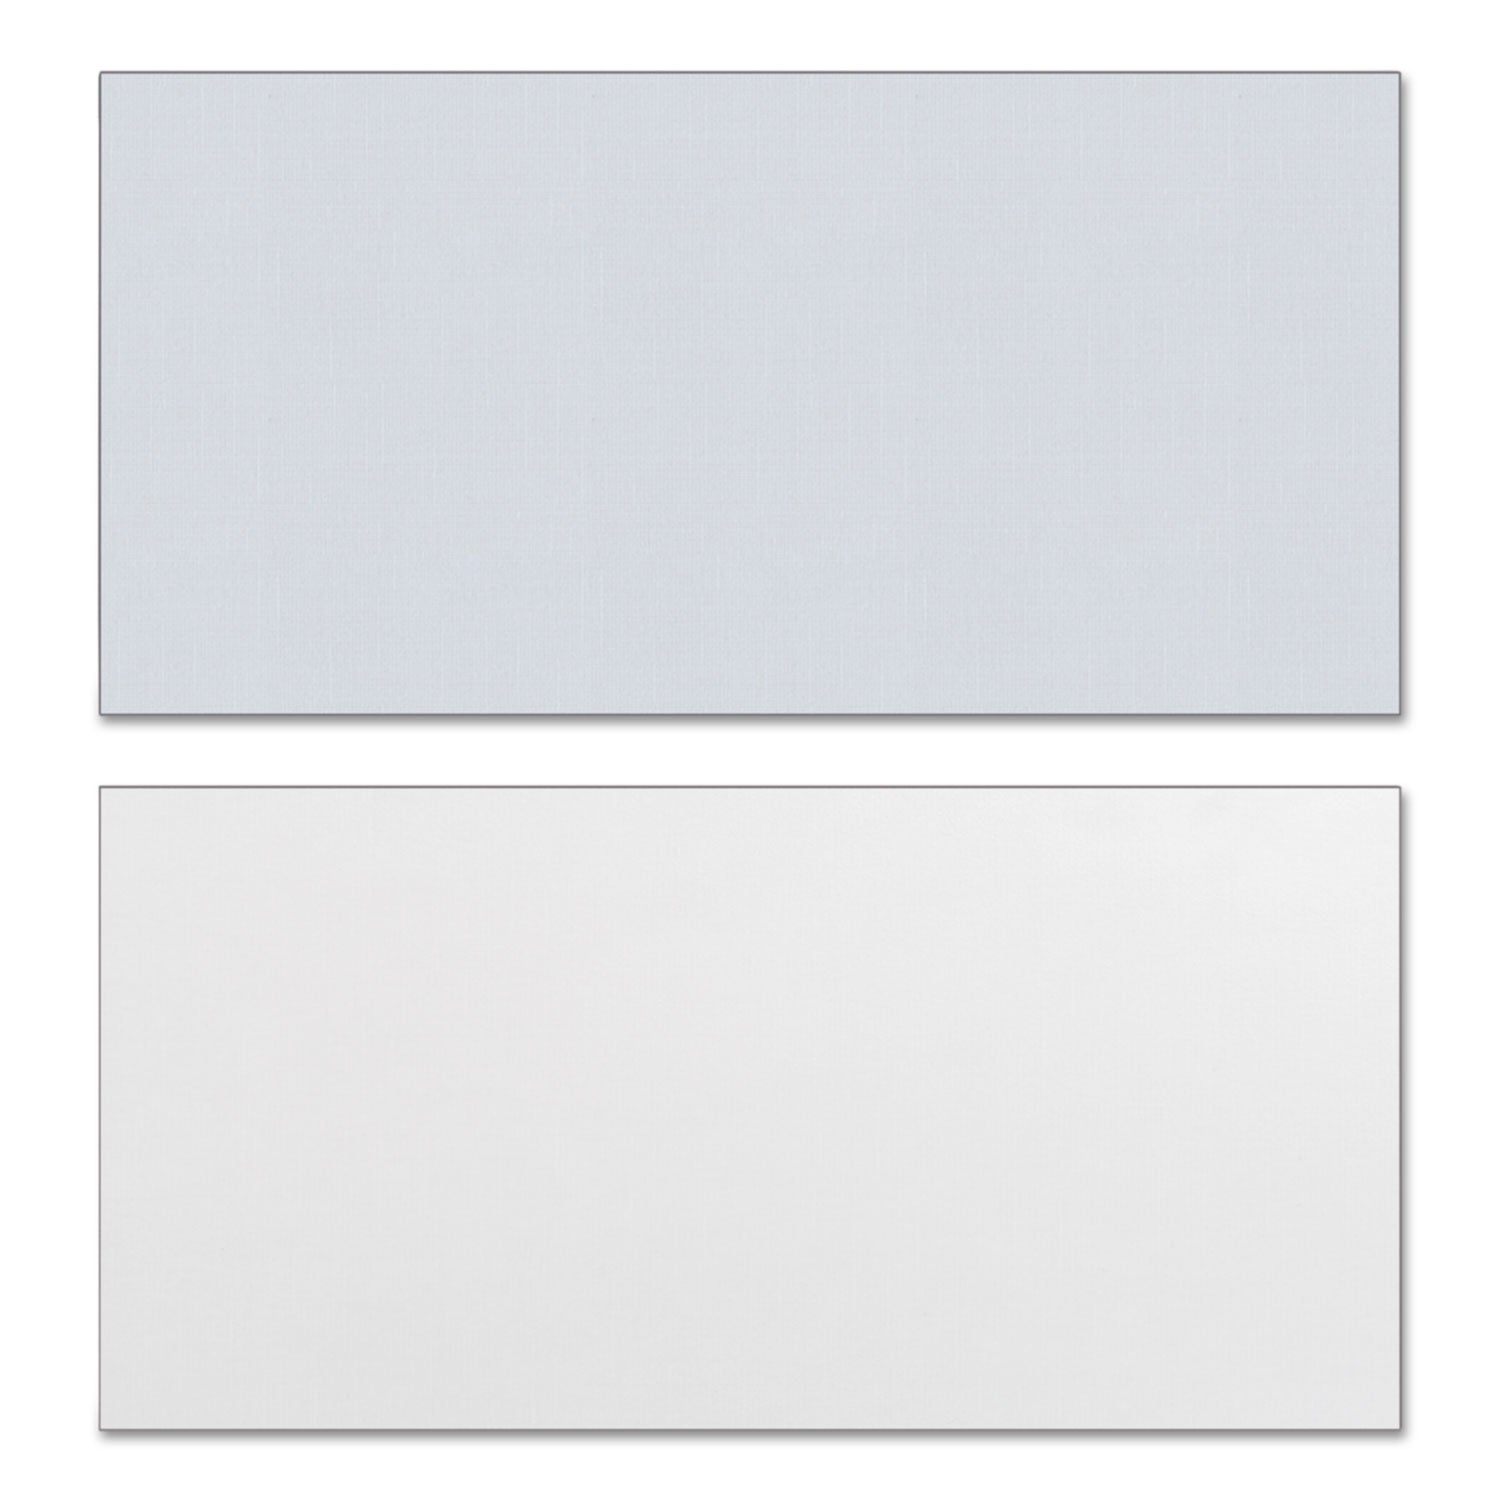 reversible-laminate-table-top-rectangular-5938w-x-295d-white-gray_alett6030wg - 2